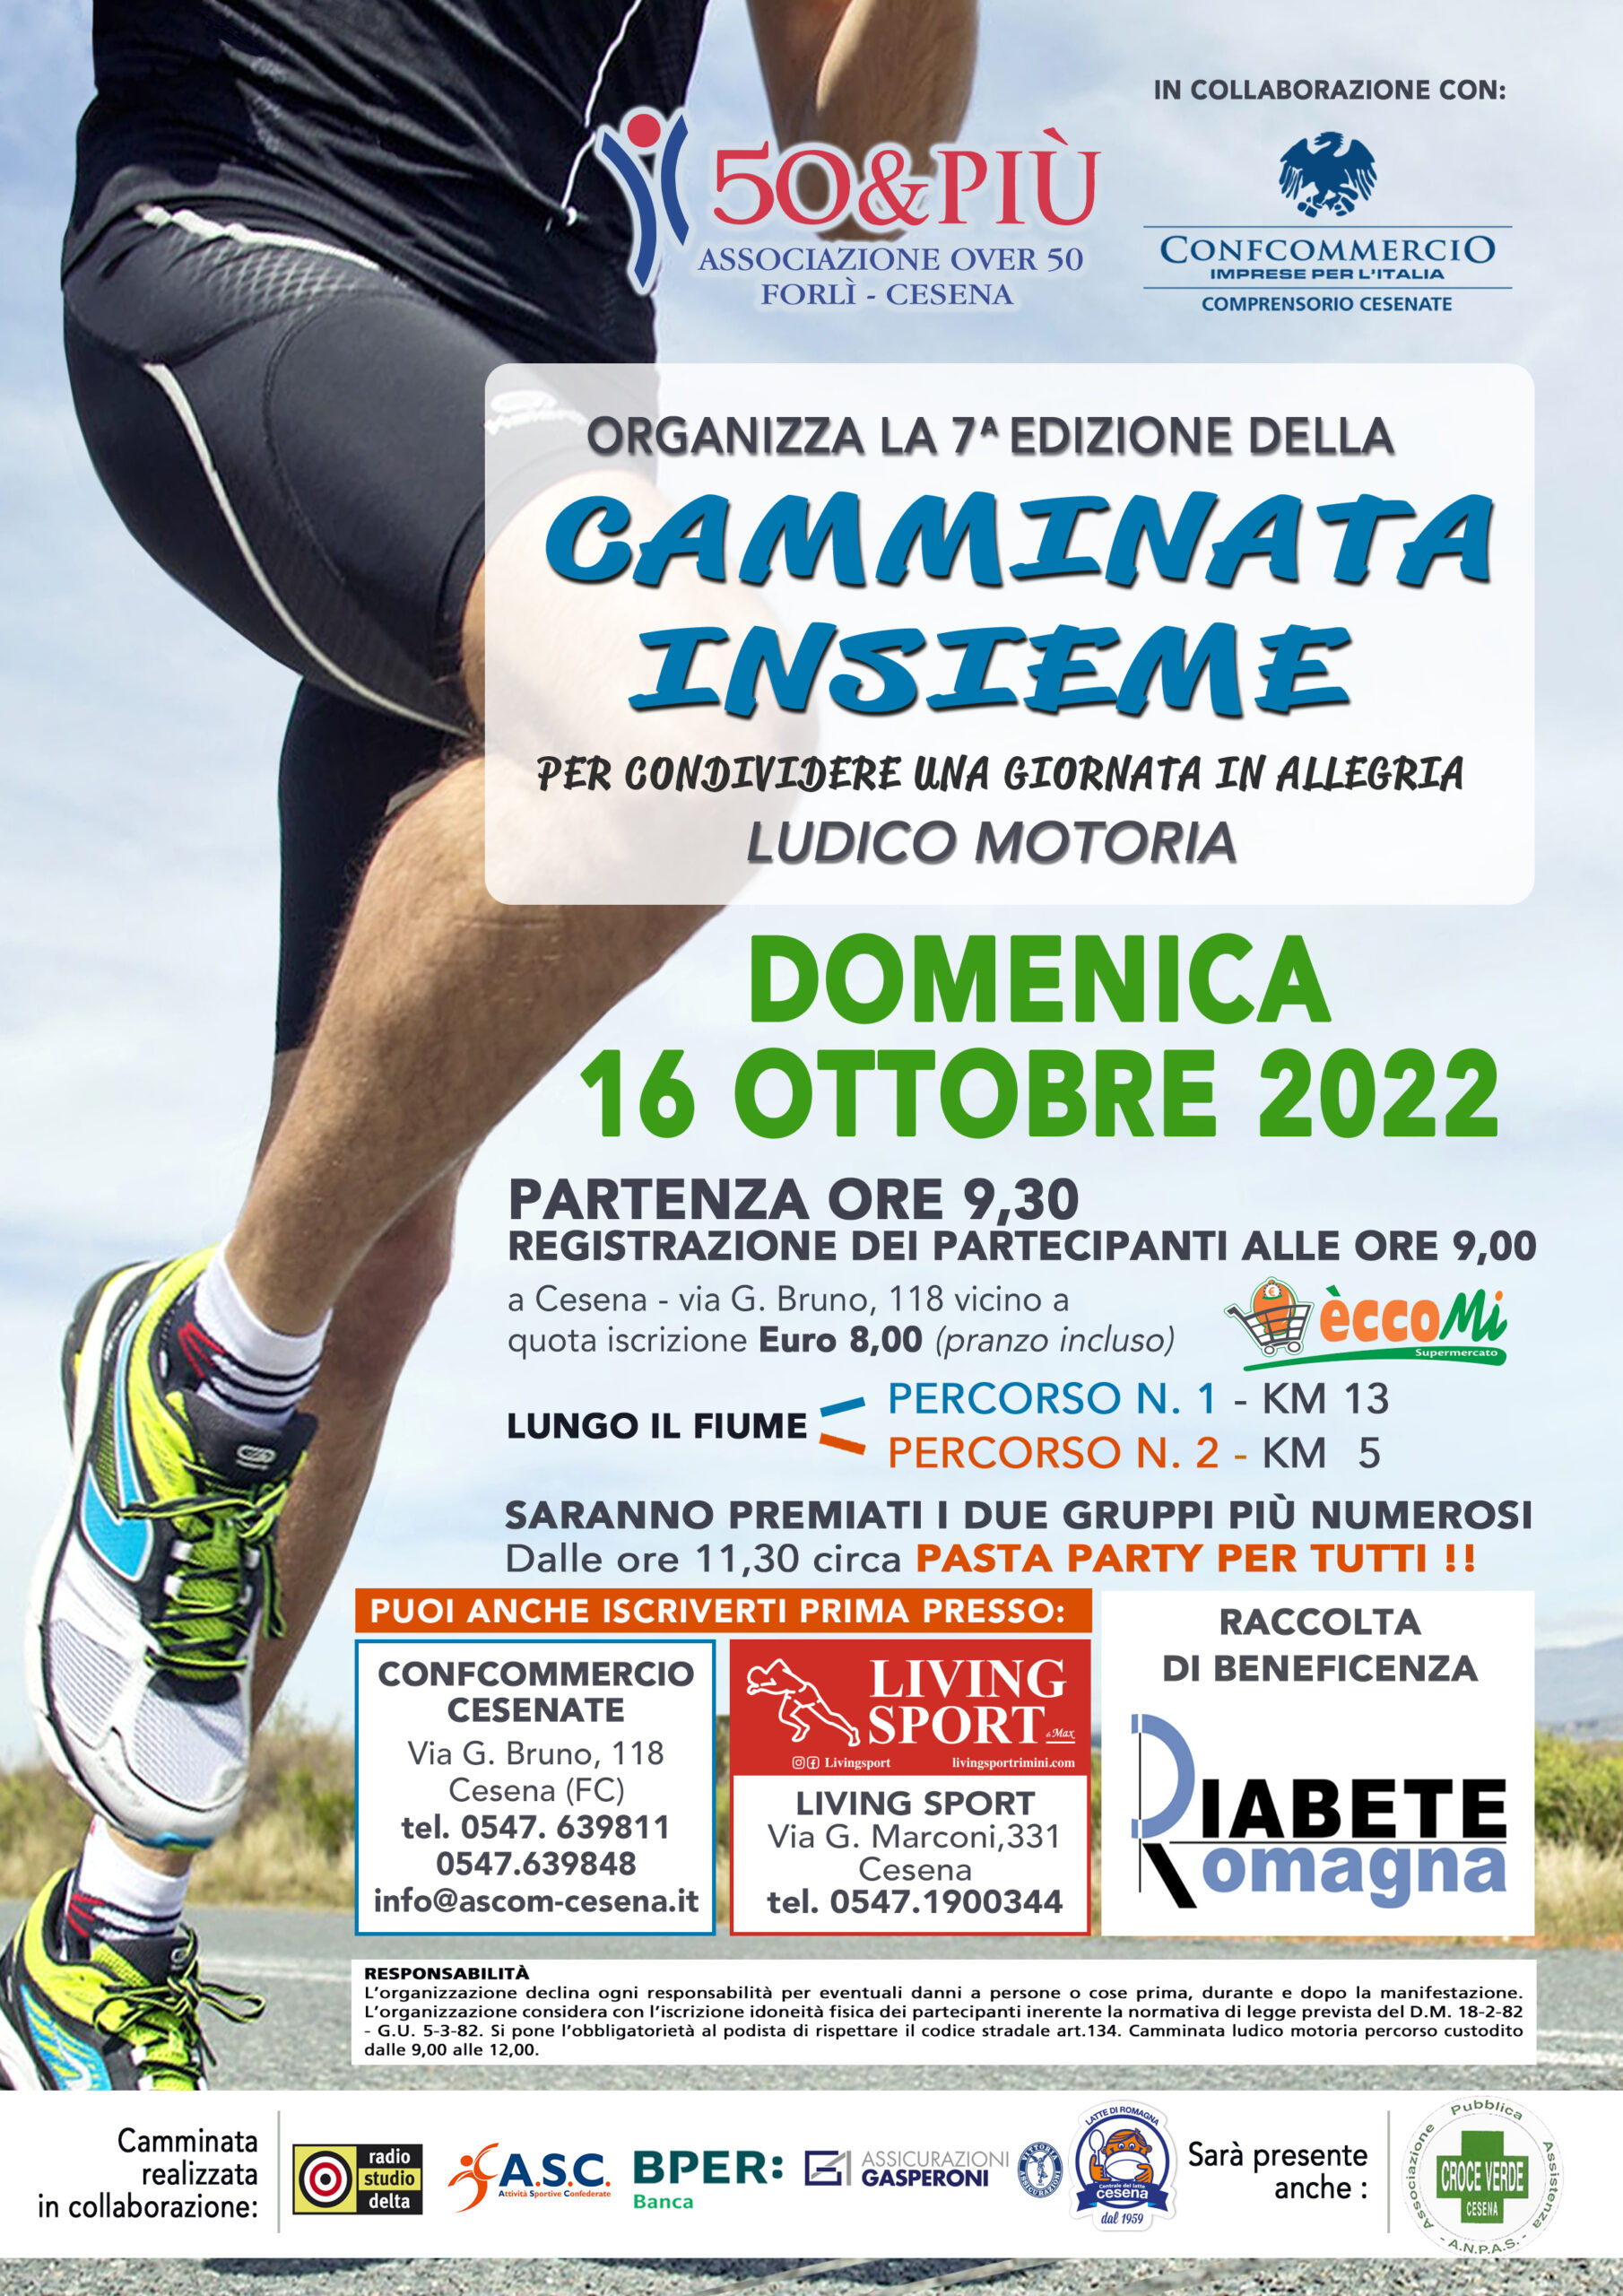 16 Ottobre “Camminata Insieme” Confcommercio Cesenate E Diabete Romagna